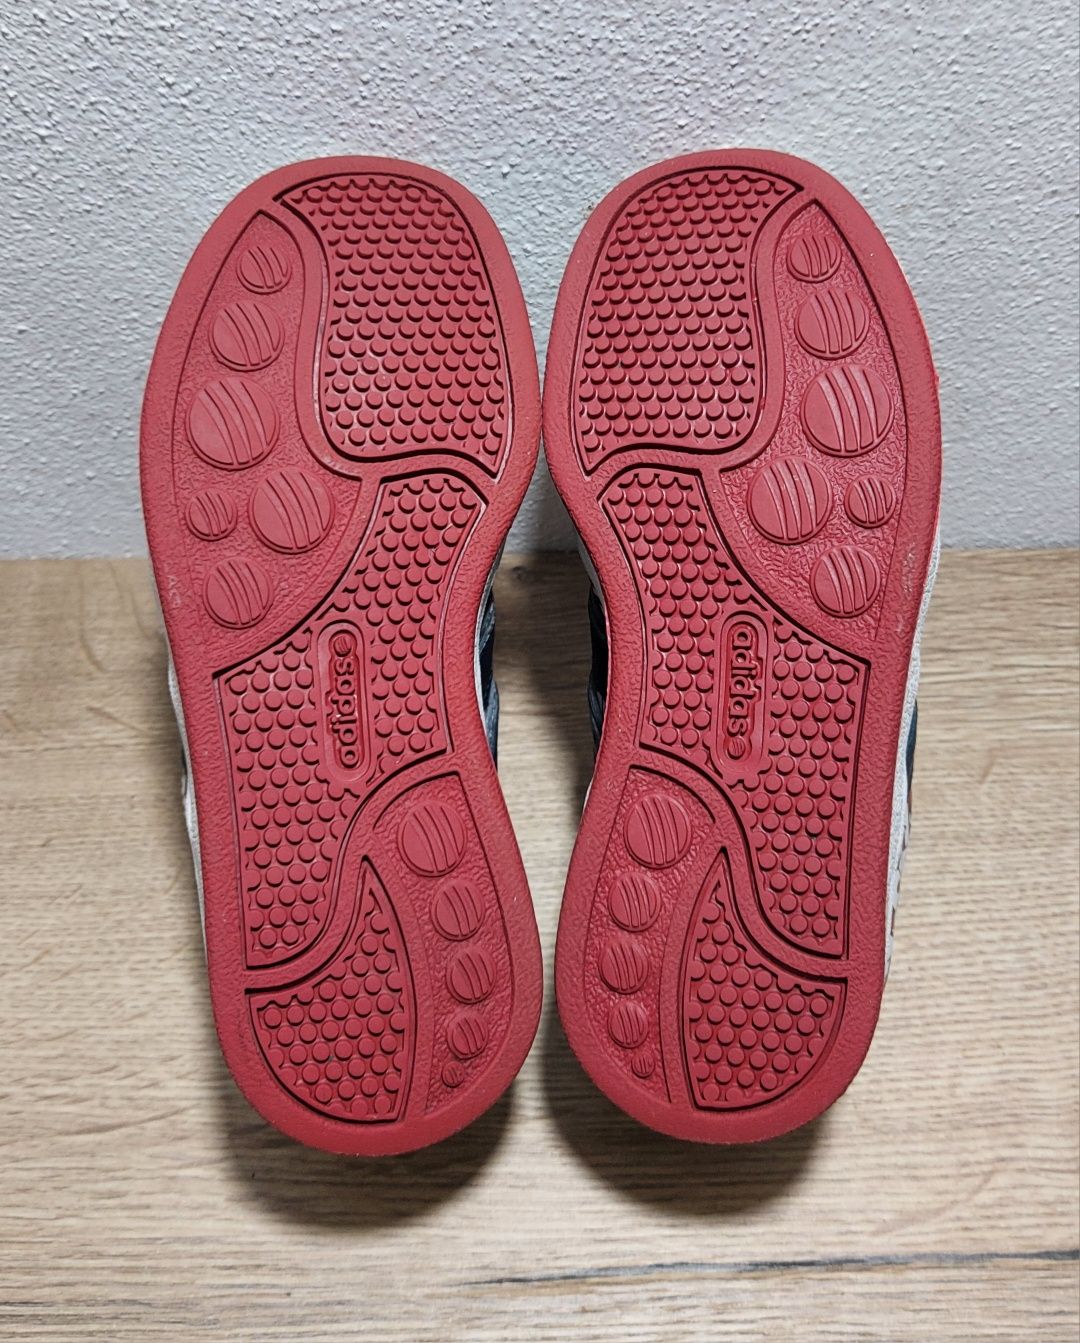 Pantofi sport ADIDAS Superstar, încălțăminte piele, nr. 28 EU unisex